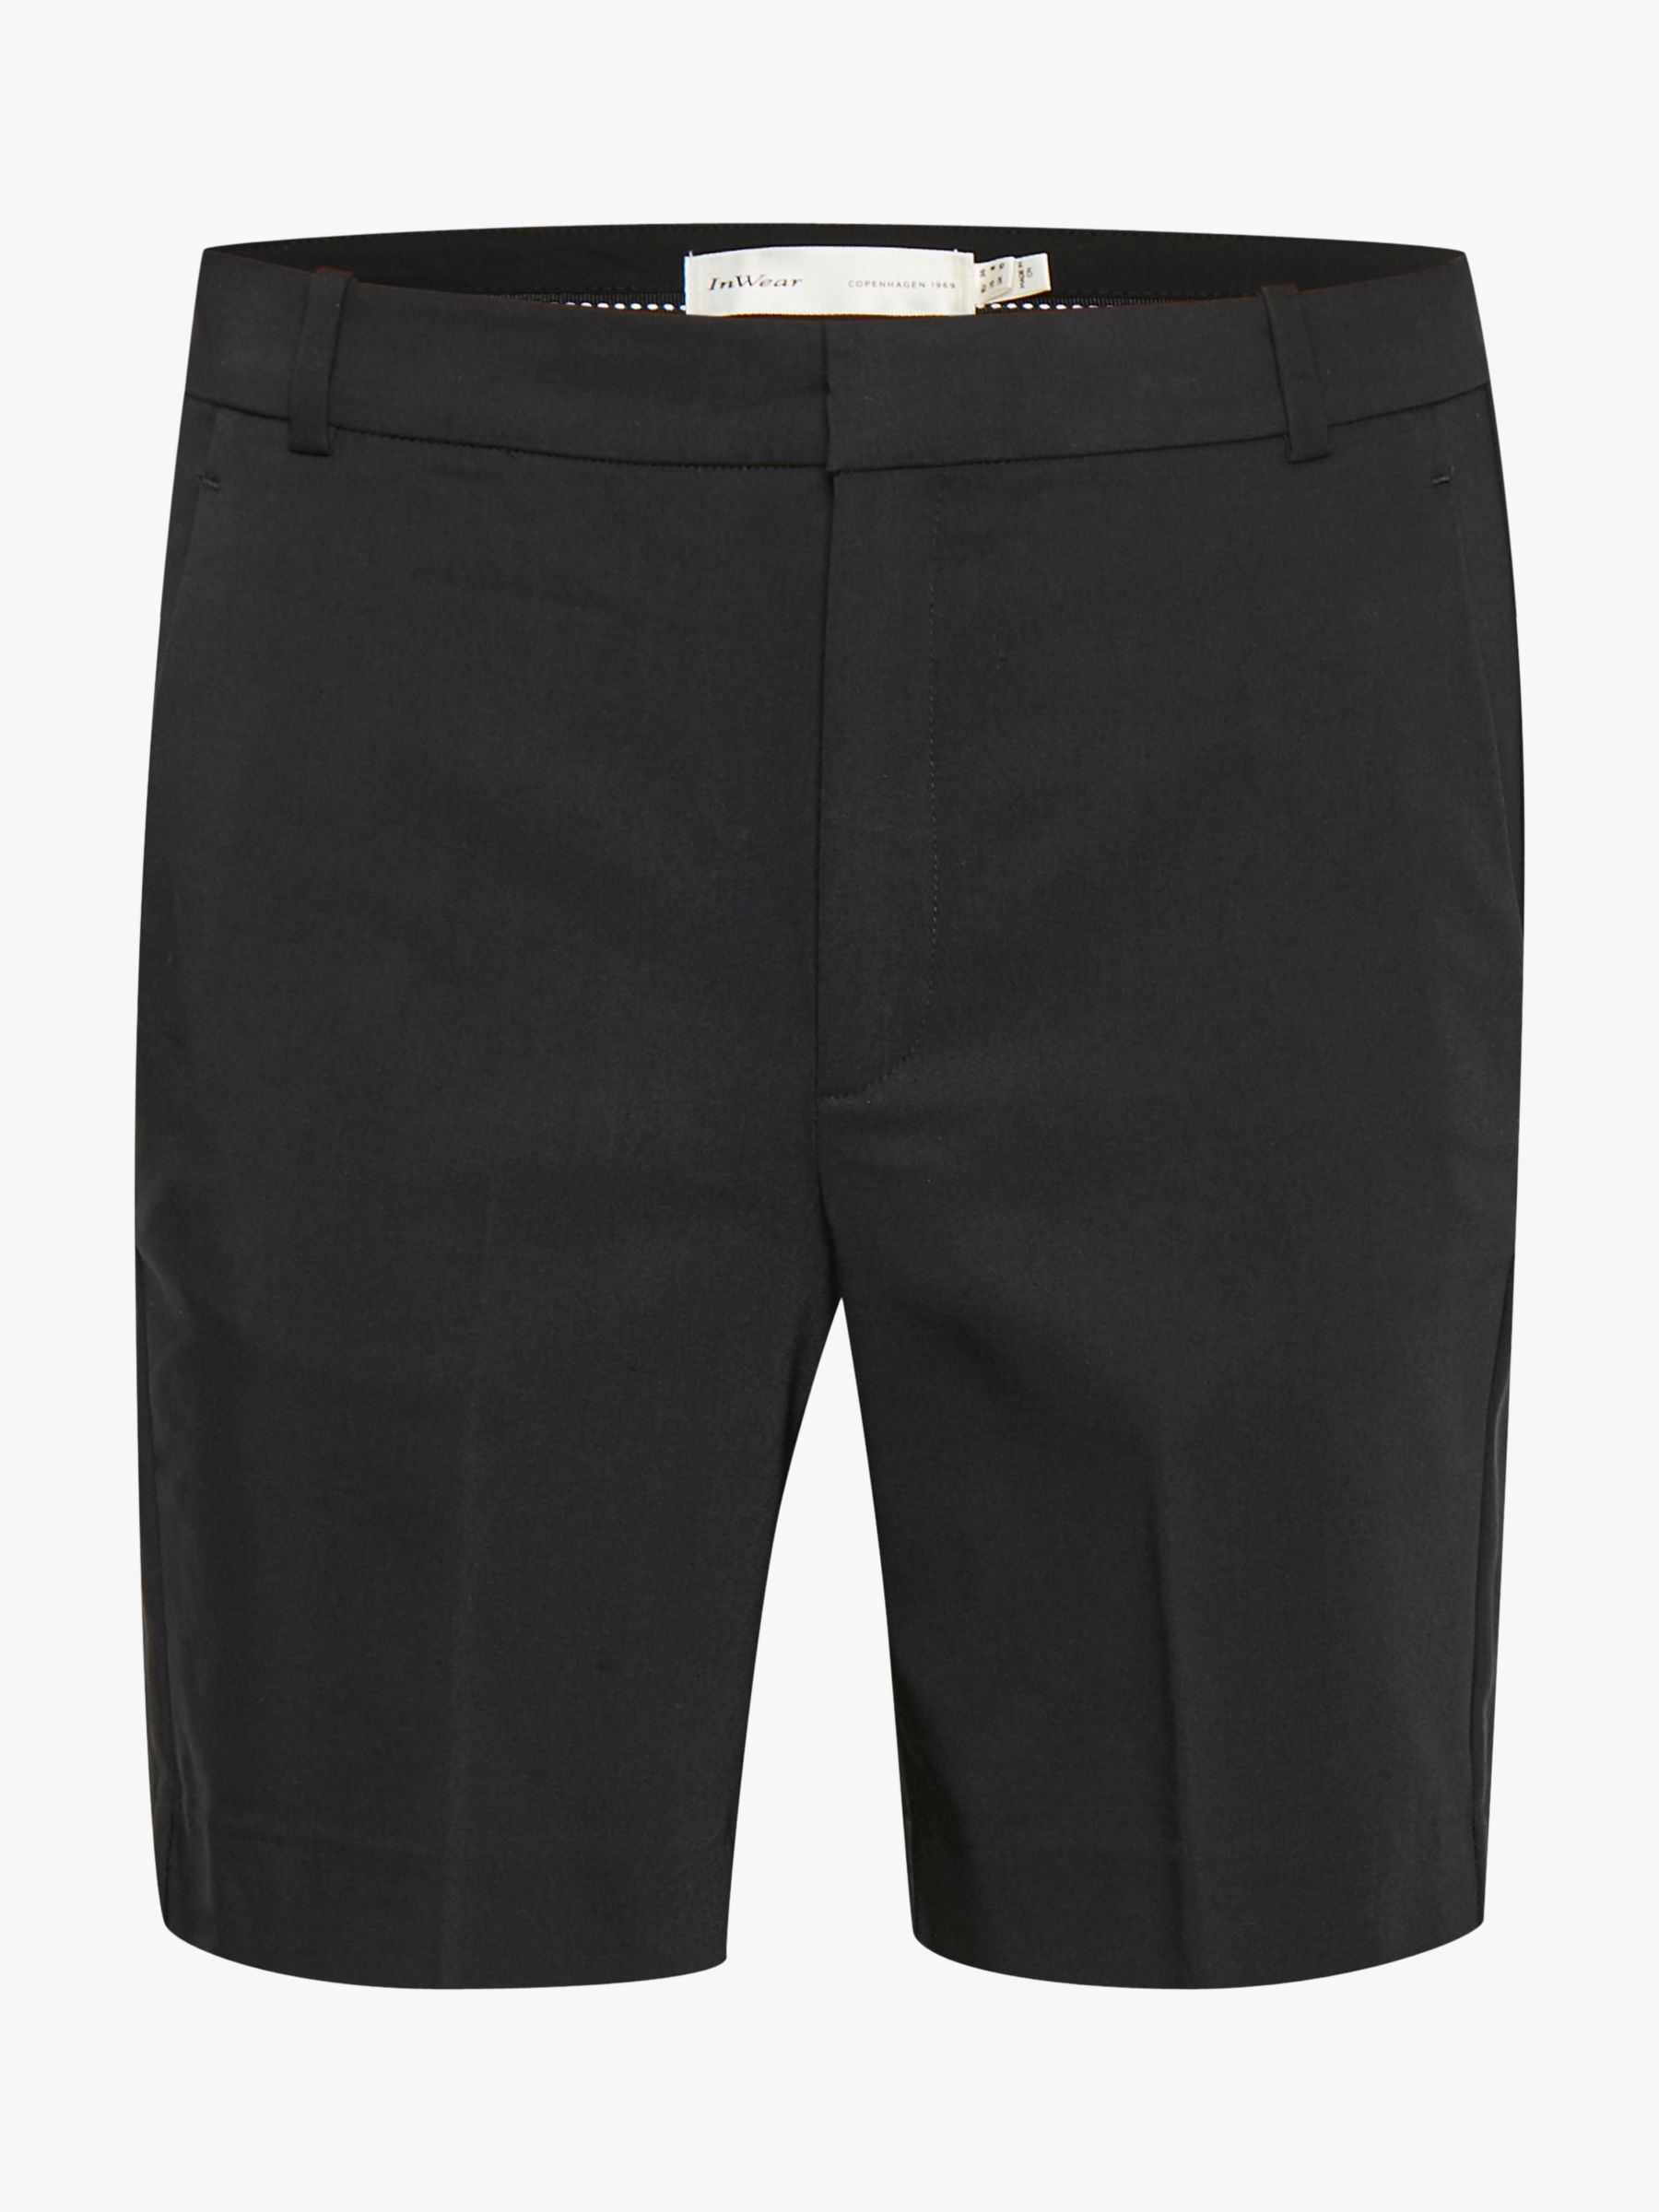 InWear Zella Shorts, Black, 8